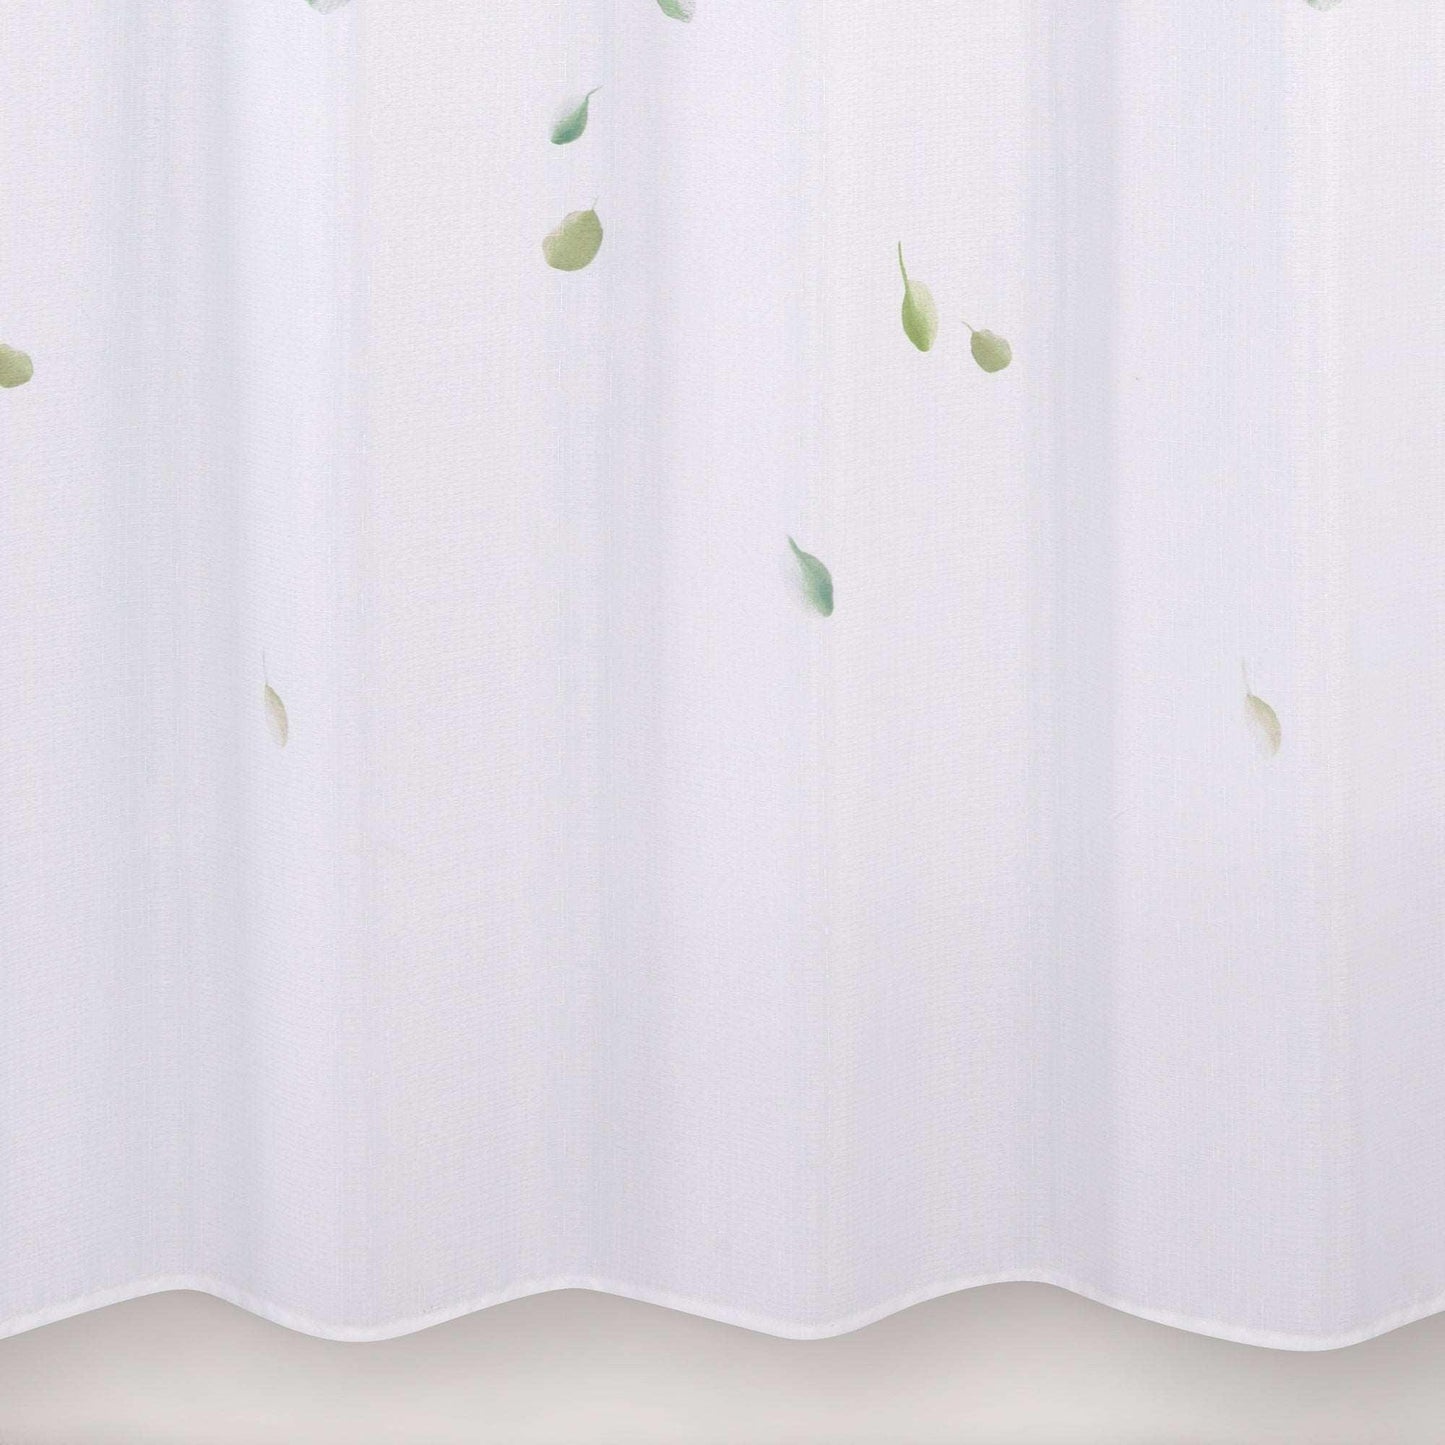 Cascade Green Leaf Vine Shower Curtain - Allure Home Creation